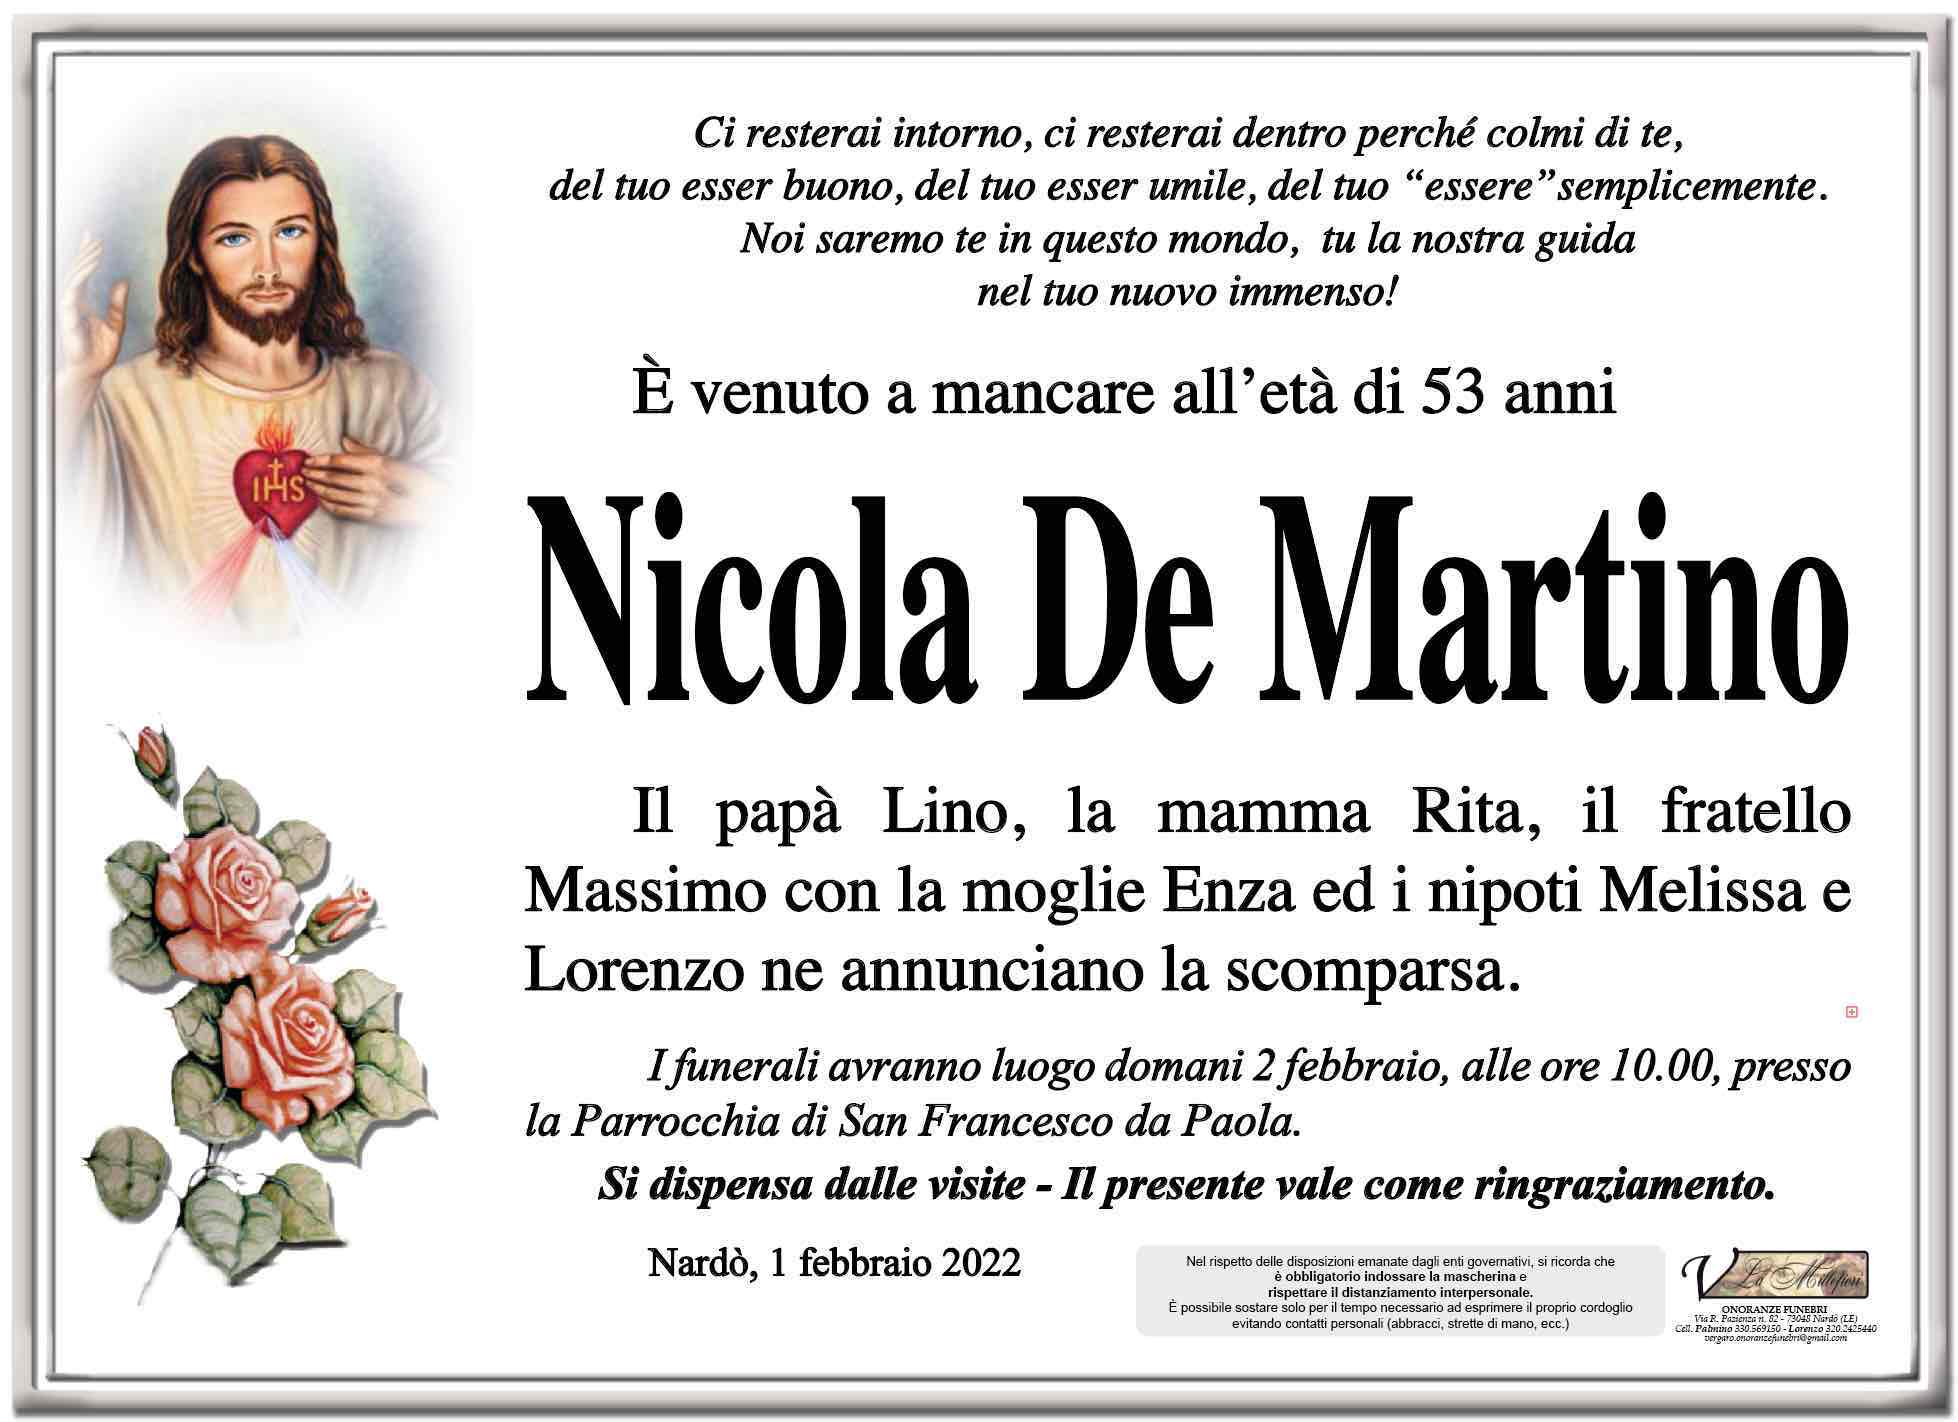 Nicola De Martino